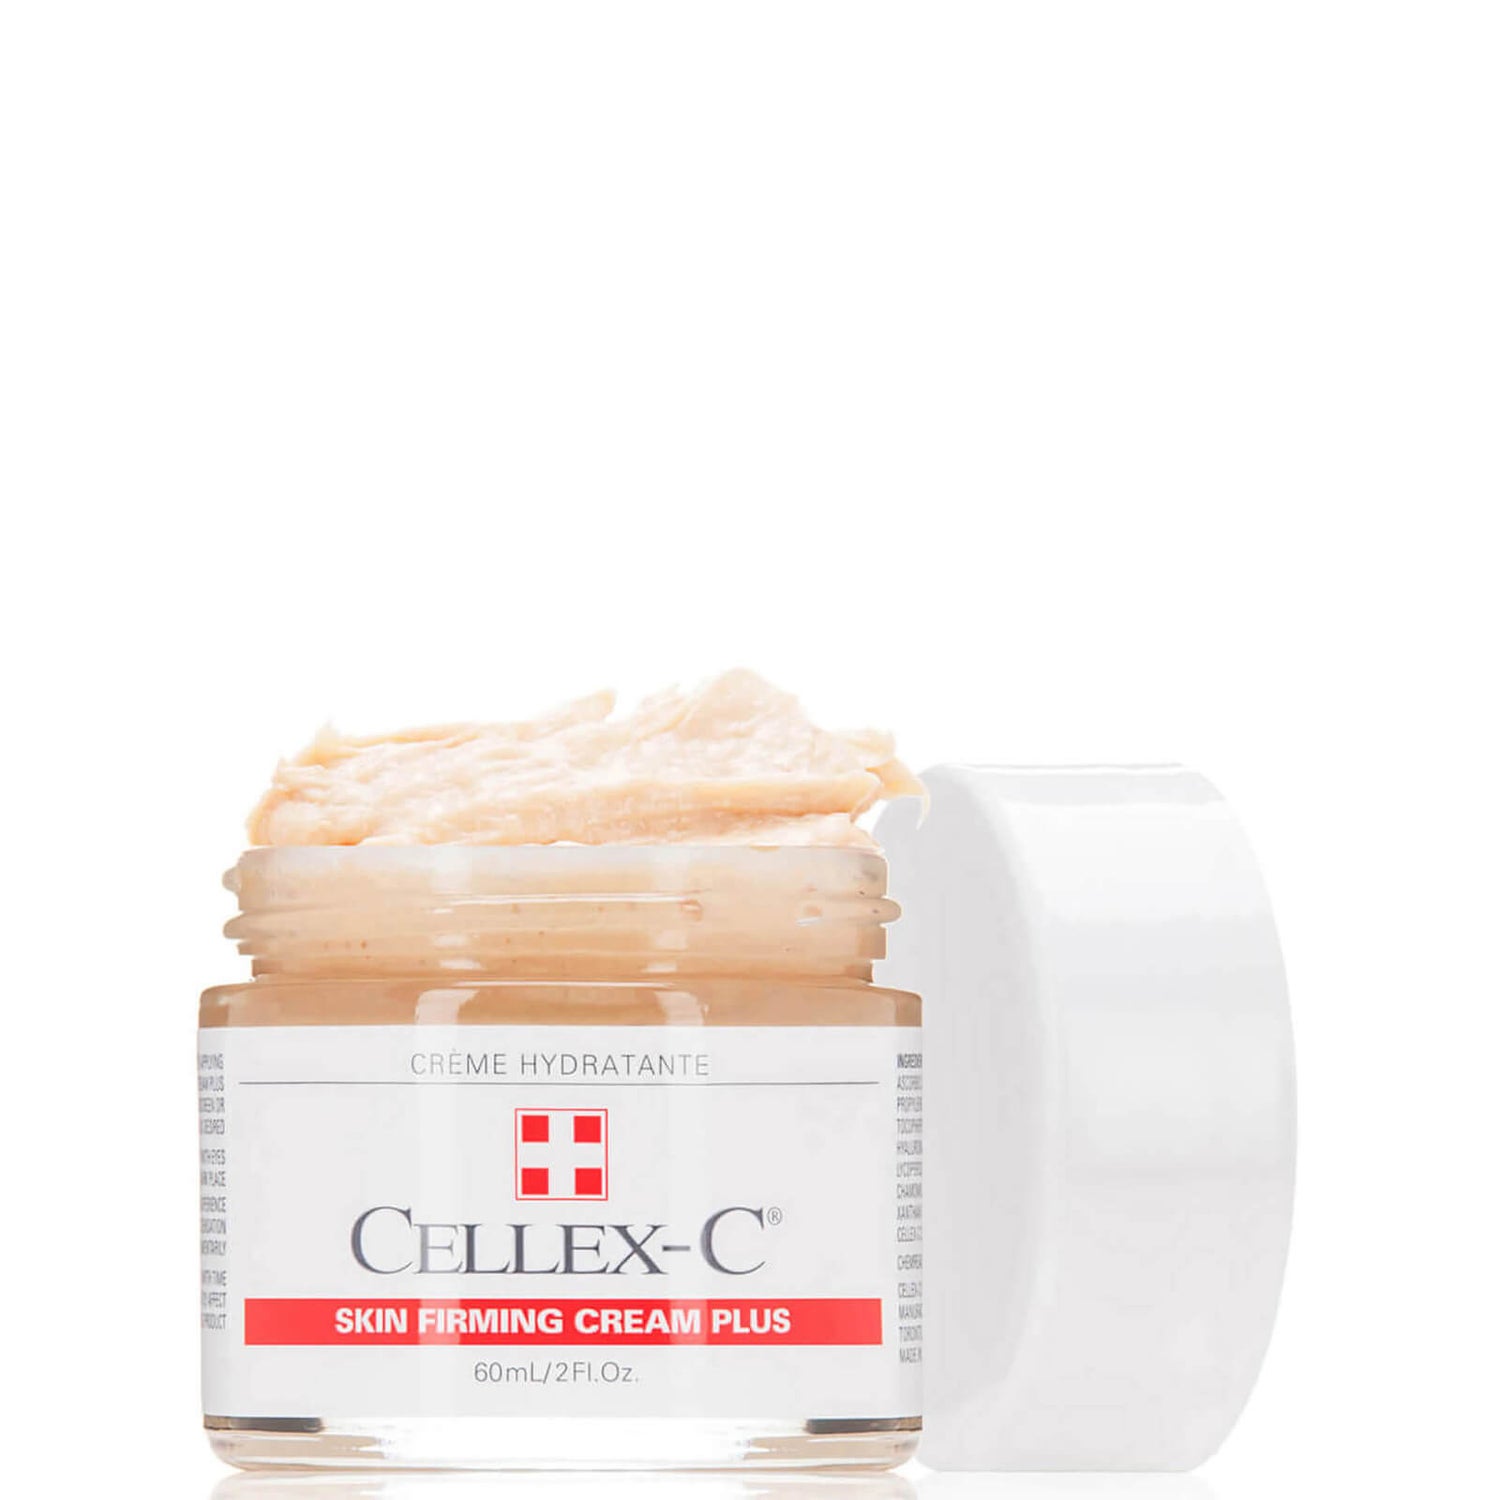 Cellex-C Skin Firming Cream Plus (2 oz.)